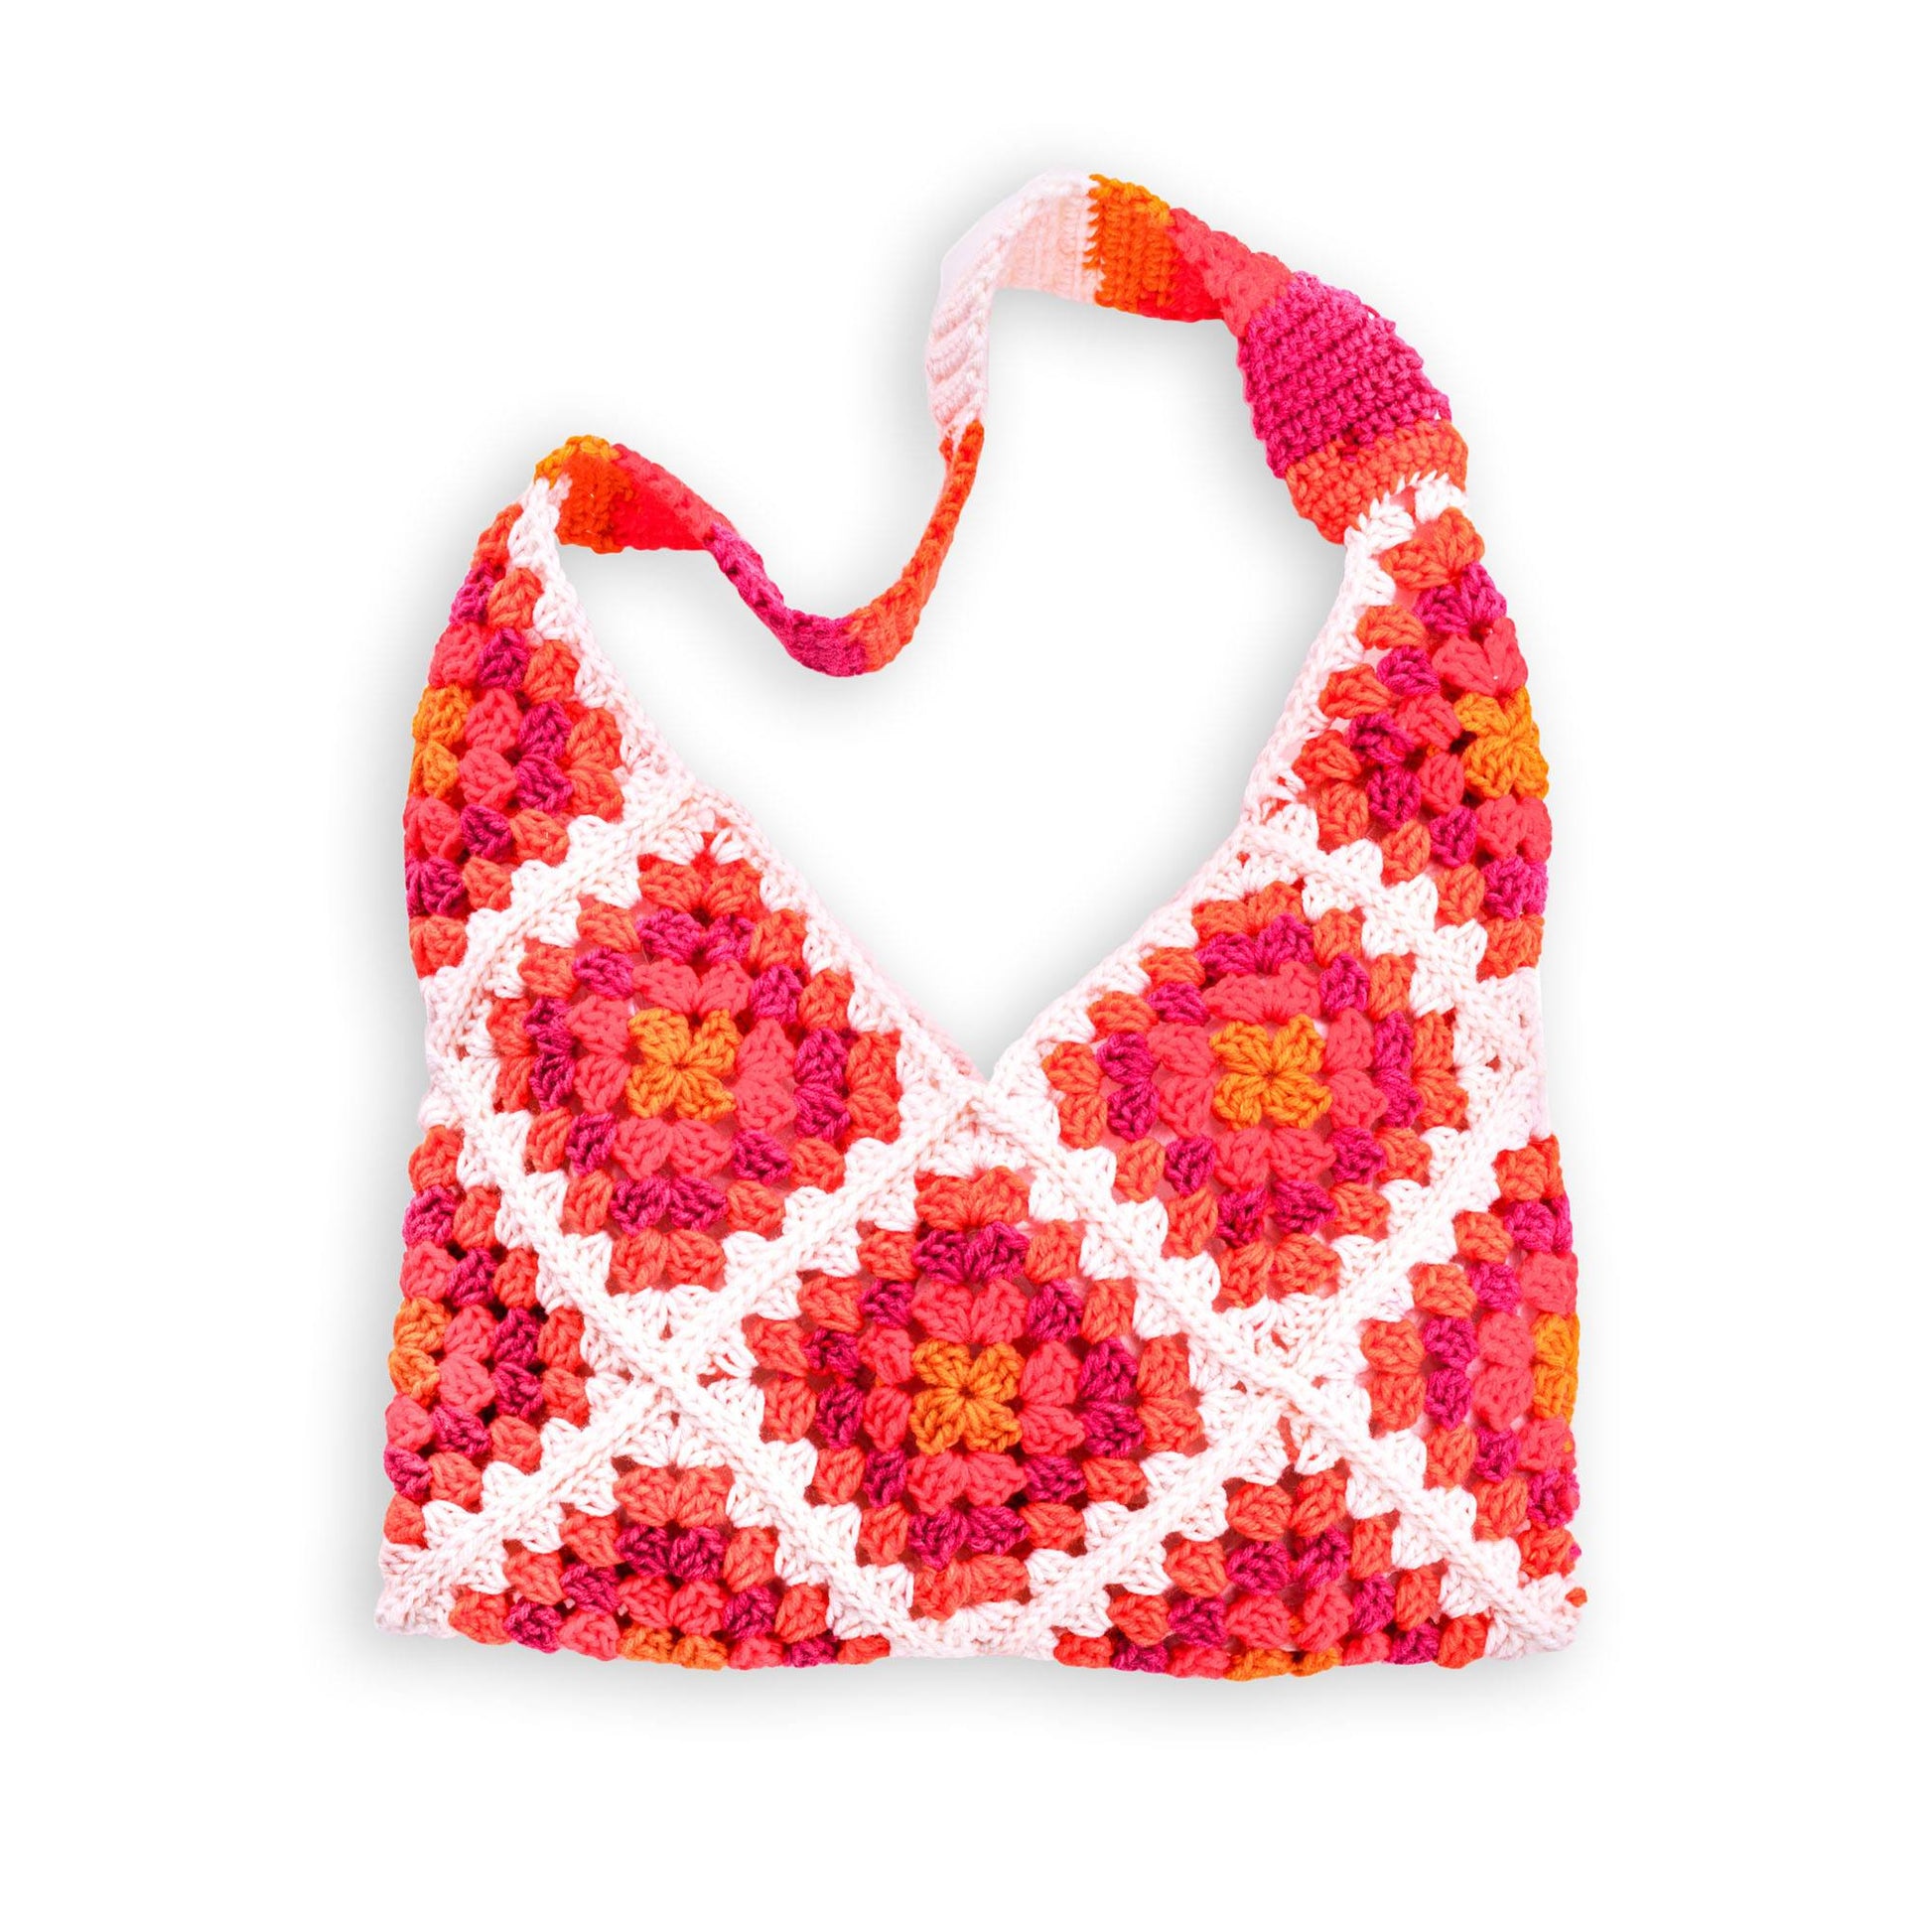 Free Red Heart Crochet Granny Square Serenity Bag Pattern